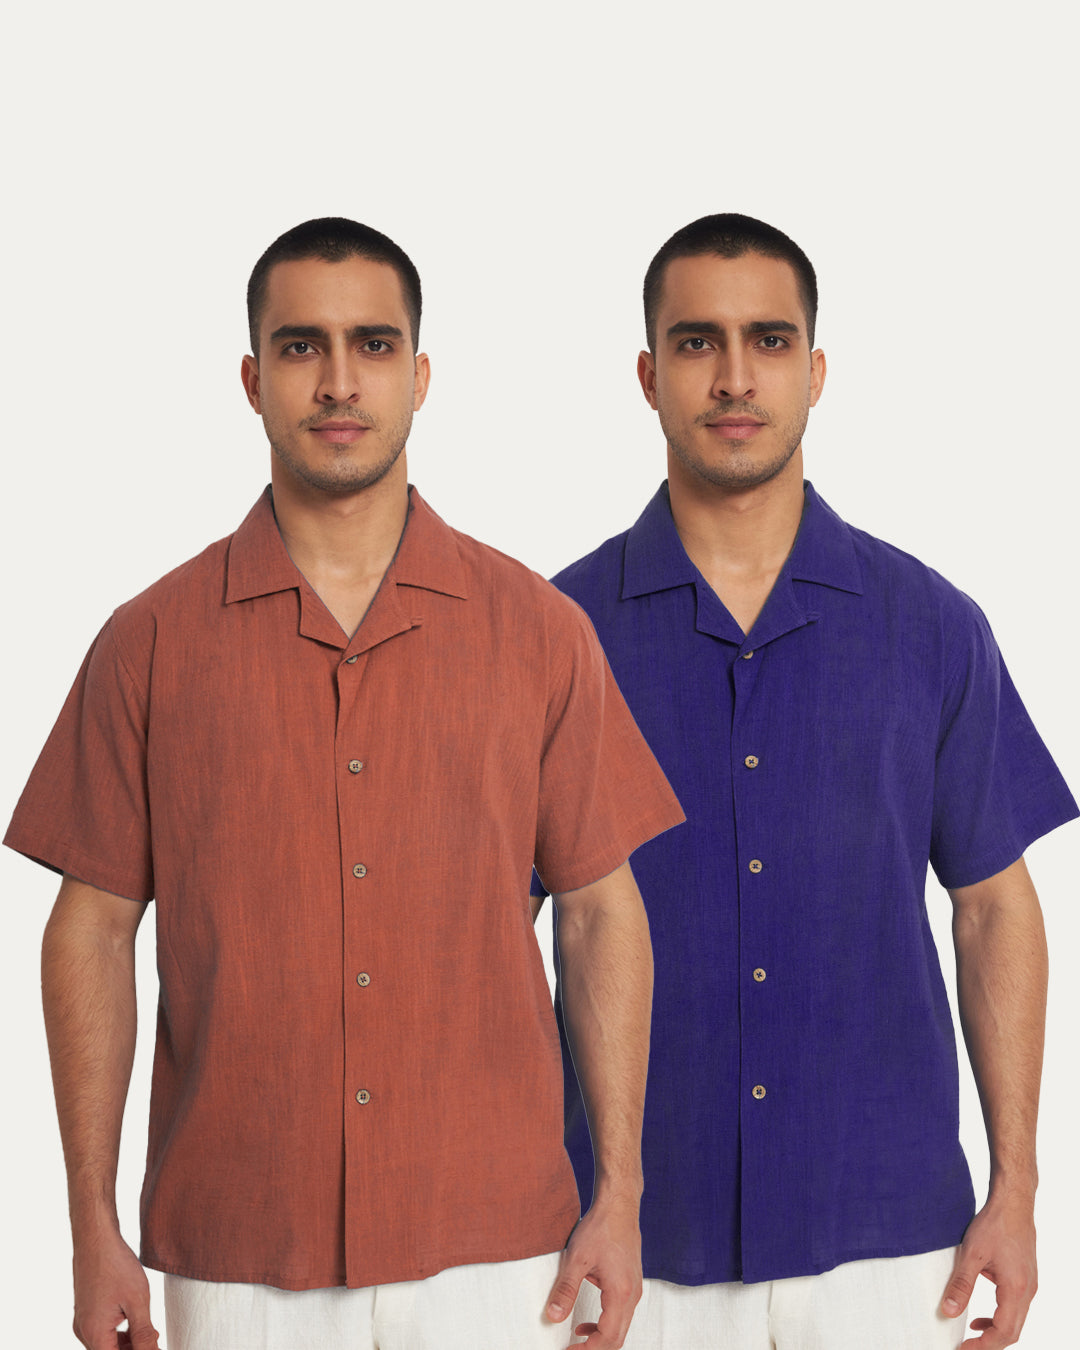 Combo : Classic Aurora Purple & Blush Men's Half Sleeves Shirt